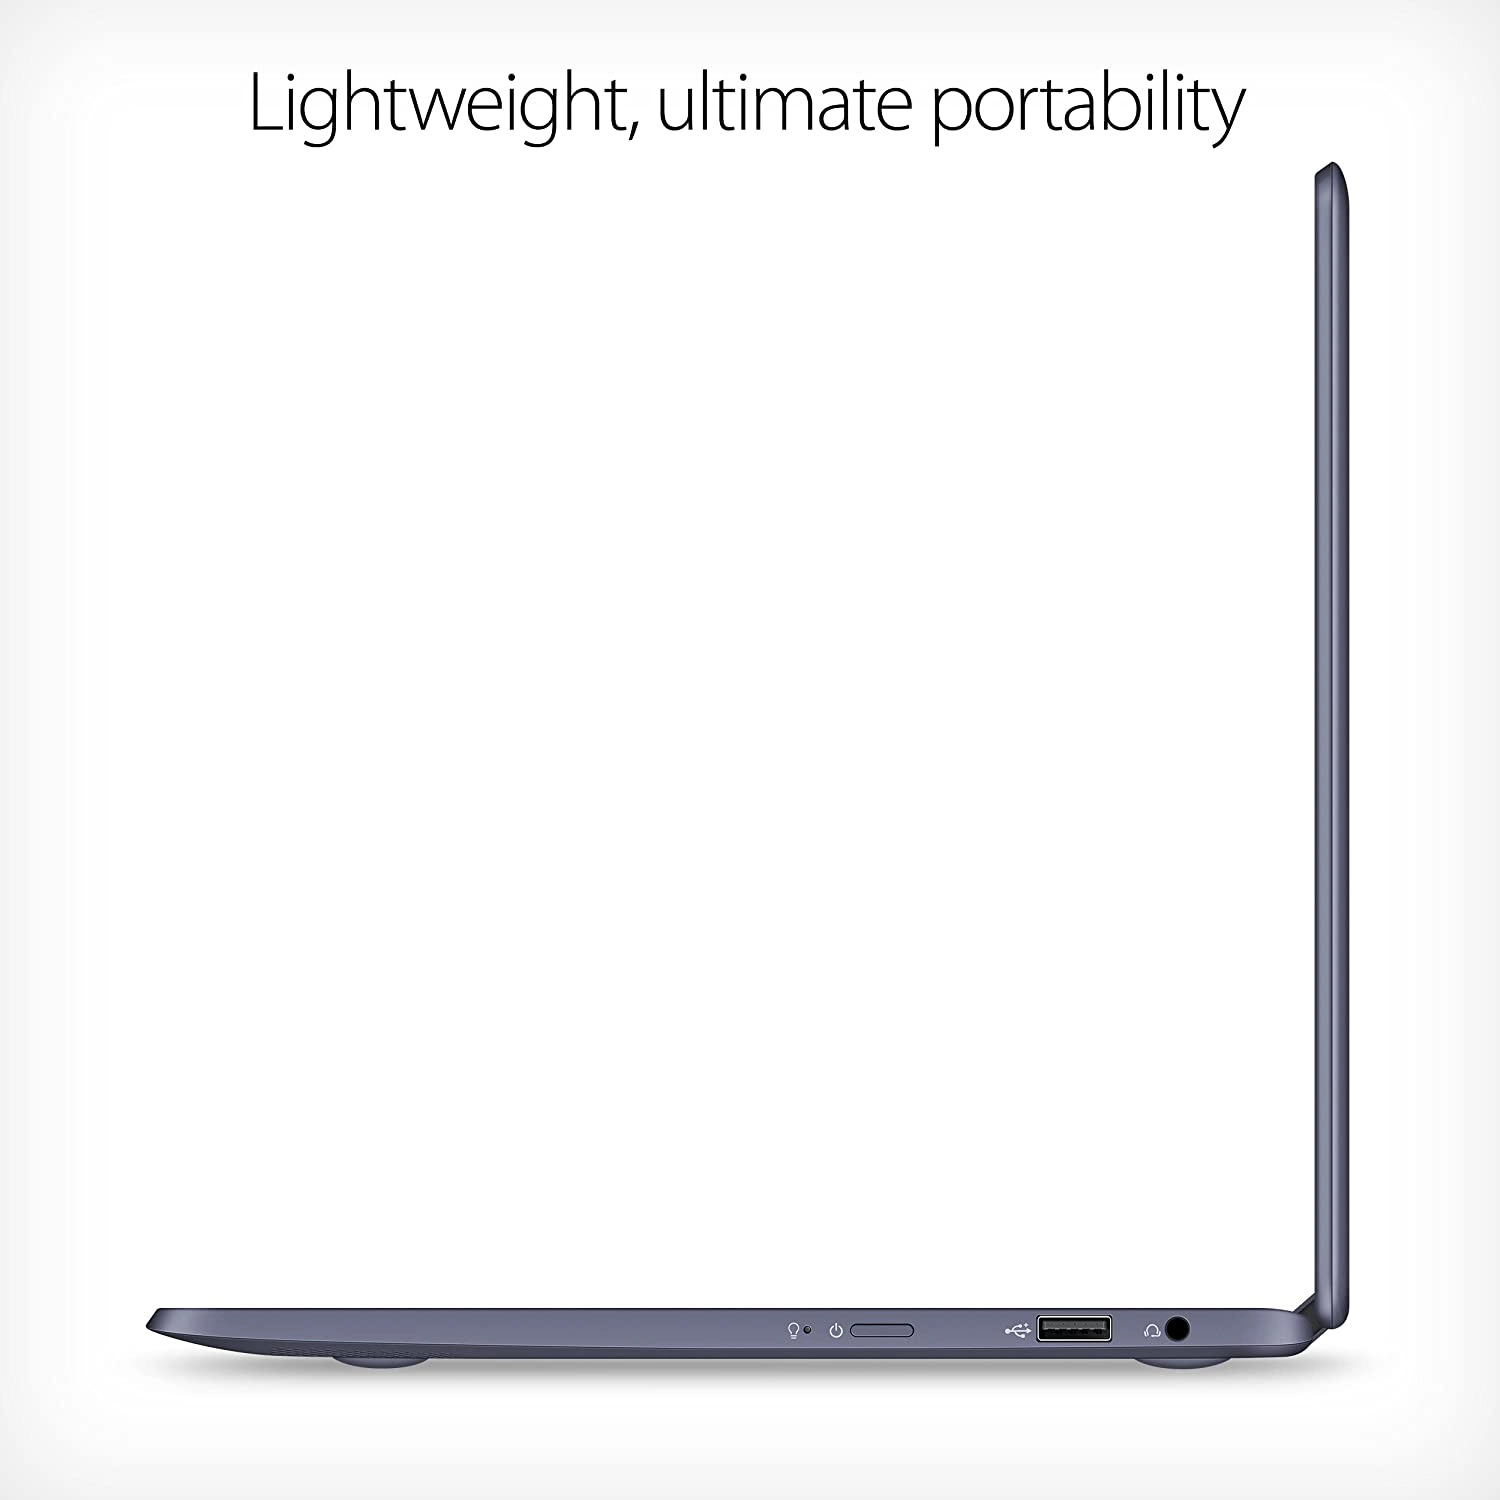 Asus VivoBook Flip J202NA-DH01T laptop image